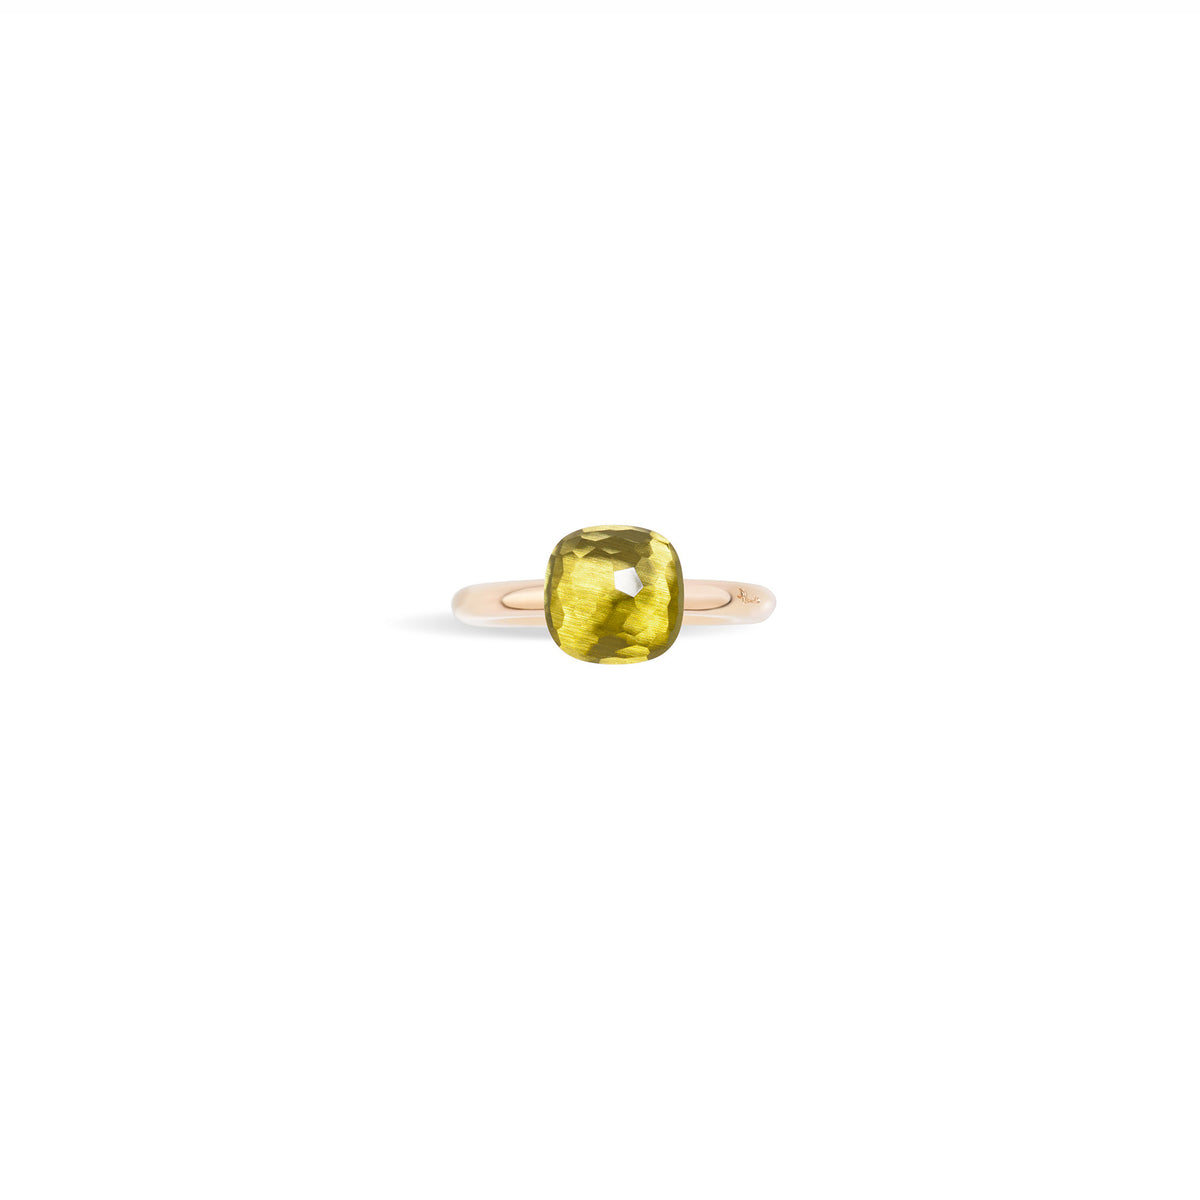 Nudo Petit Ring in 18k Rose Gold and White Gold with Lemon Quartz - Orsini Jewellers NZ